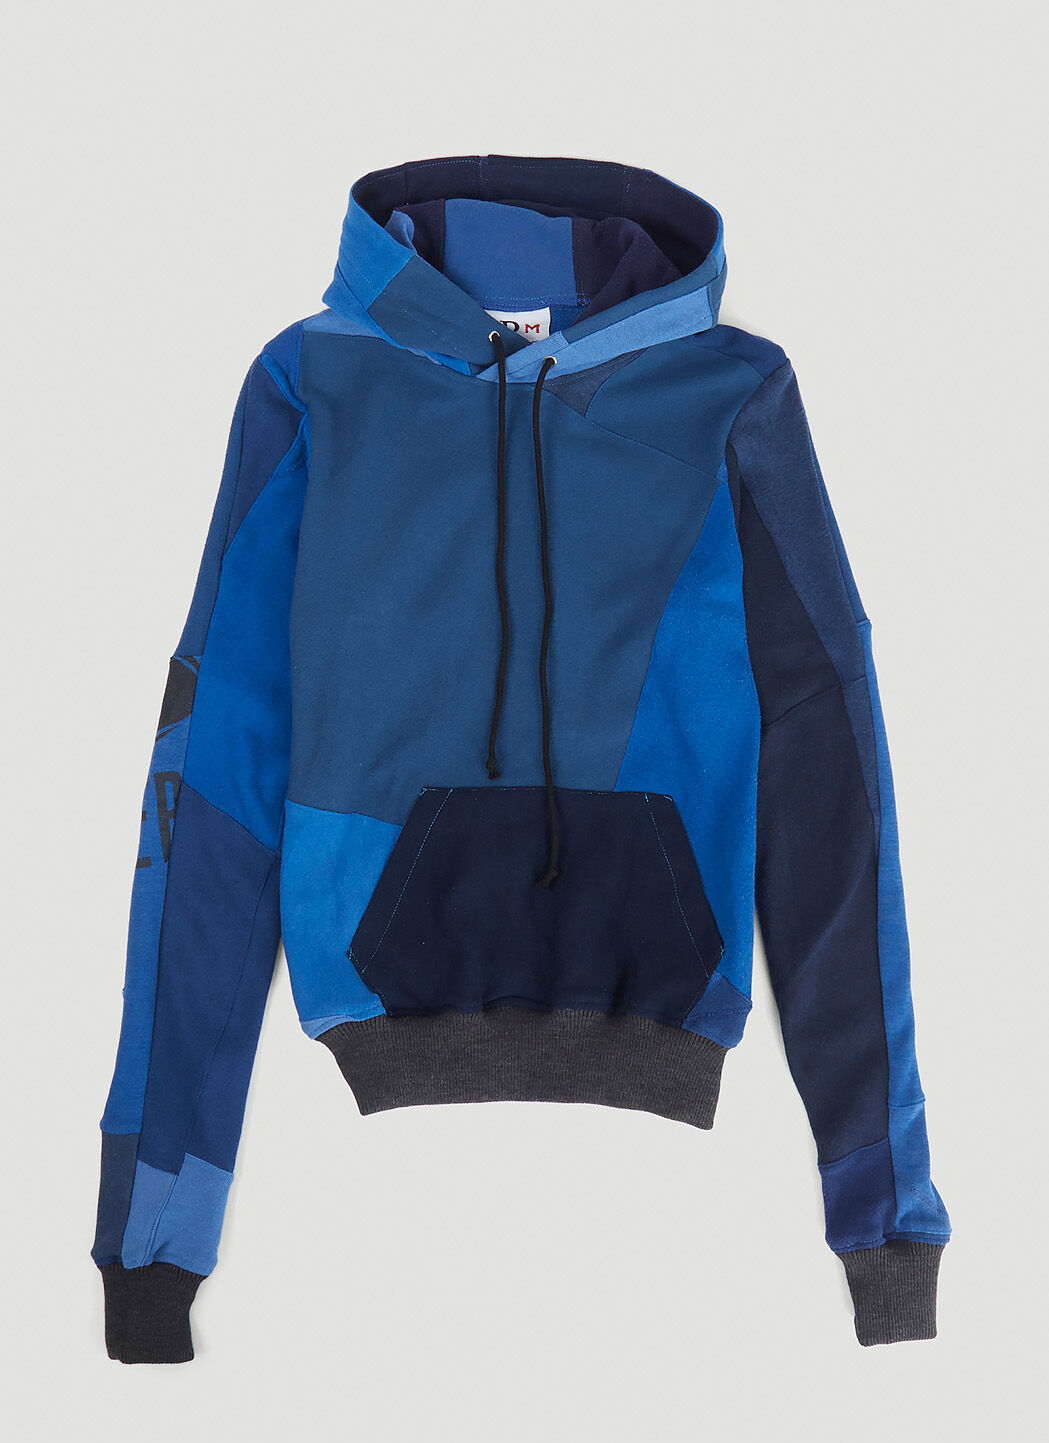 DRx FARMAxY FOR LN-CC Monochromatic Deconstructed Panelling Hooded Sweatshirt Black drx0347011